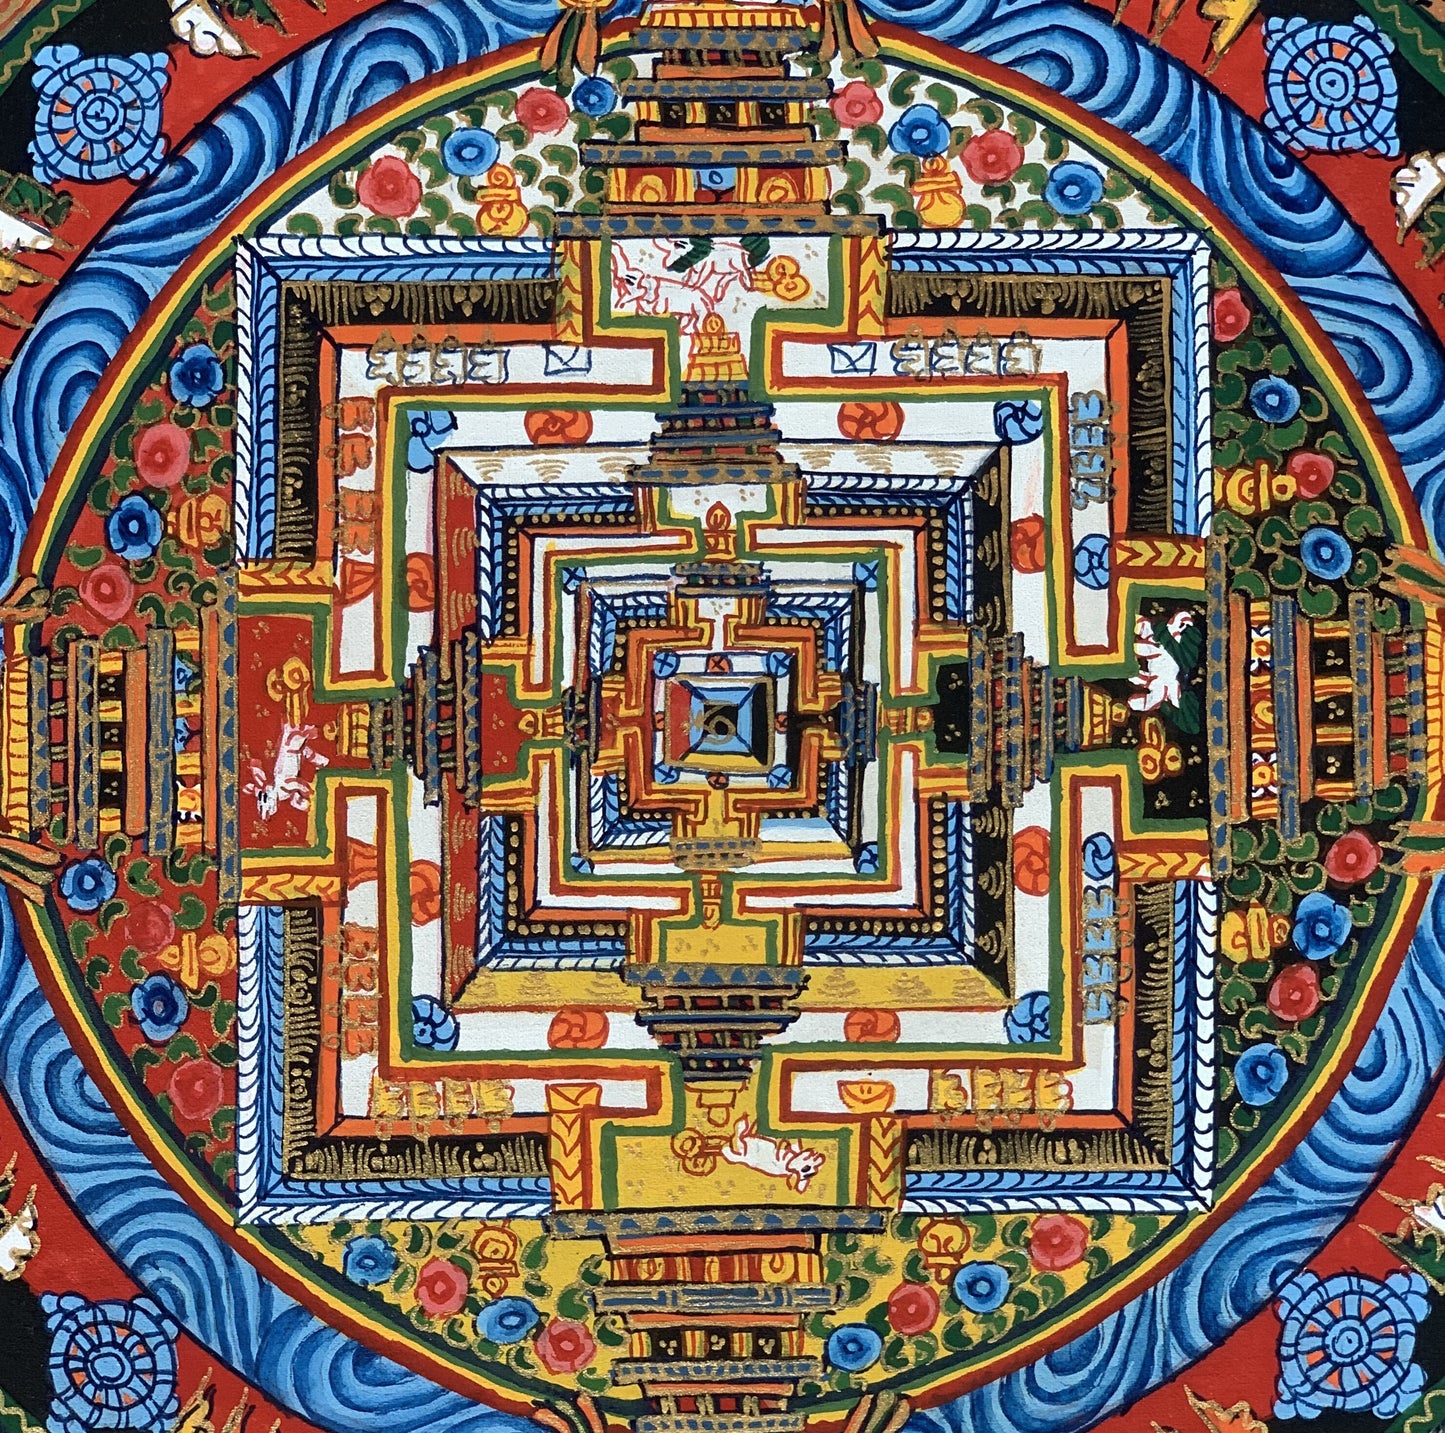 Wheel of Life, Wheel of Time, Kalachakra, Mantra Mandala, Tibetan Thangka Painting, Original Art  13 x 13 Inch